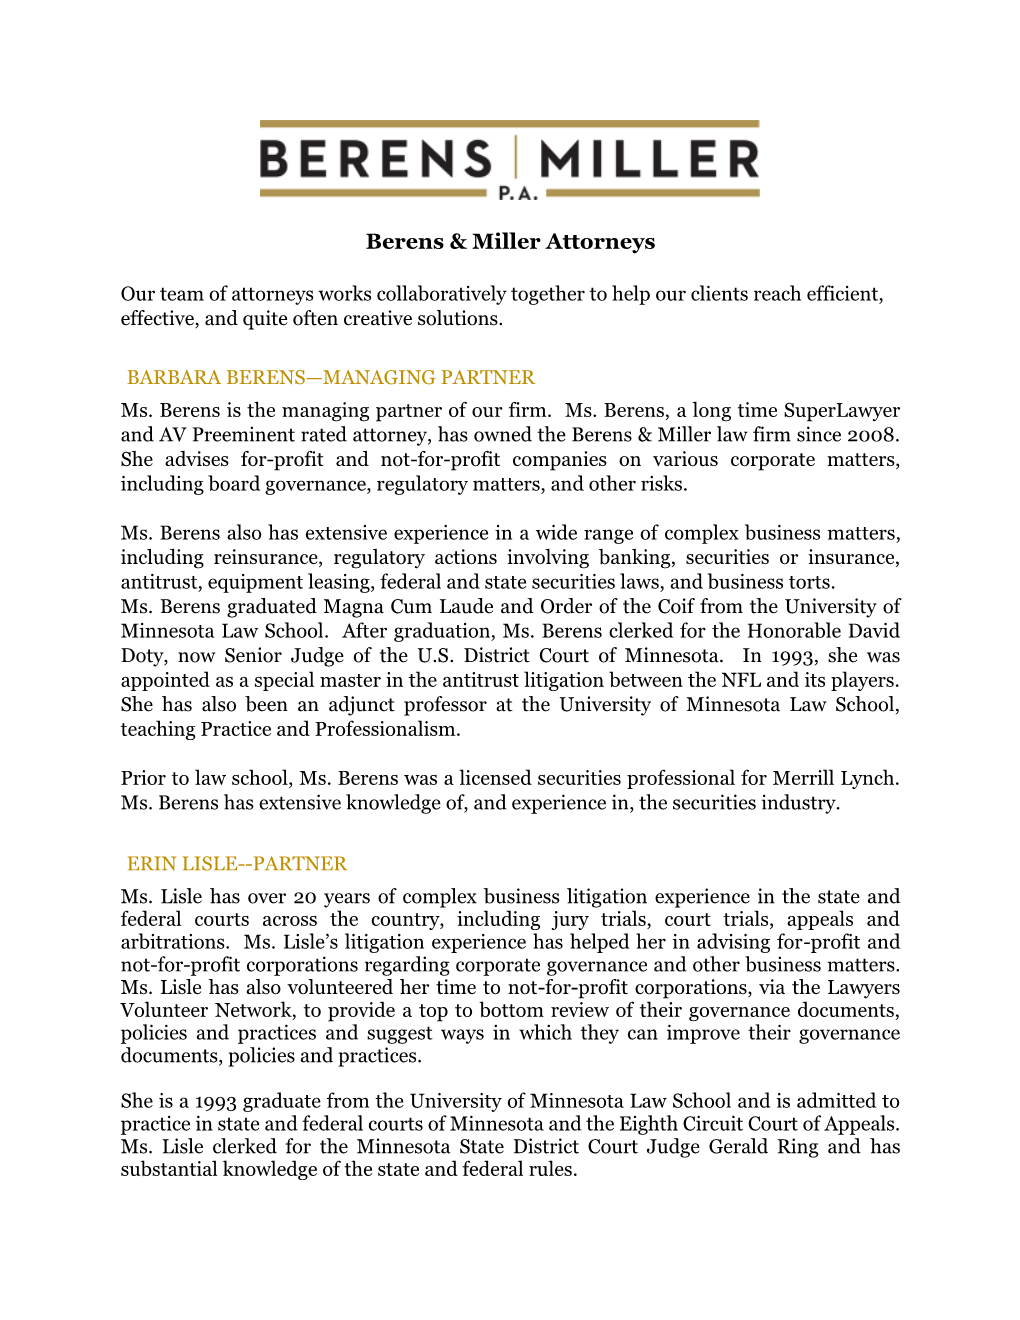 Berens & Miller Attorney Bios